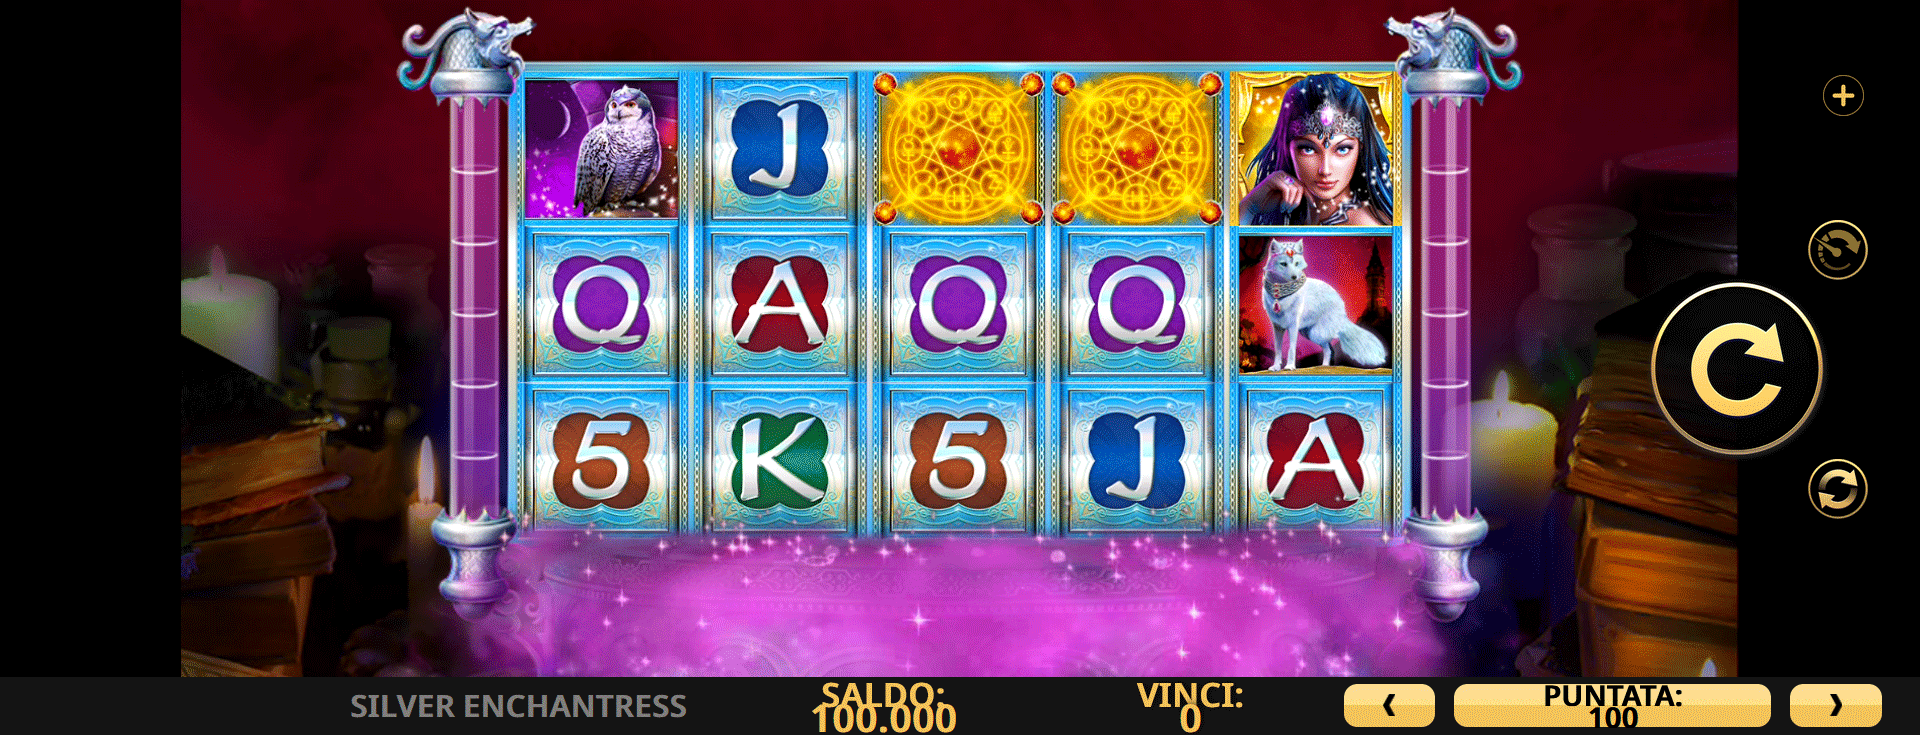 schermata della slot machine silver enchantress